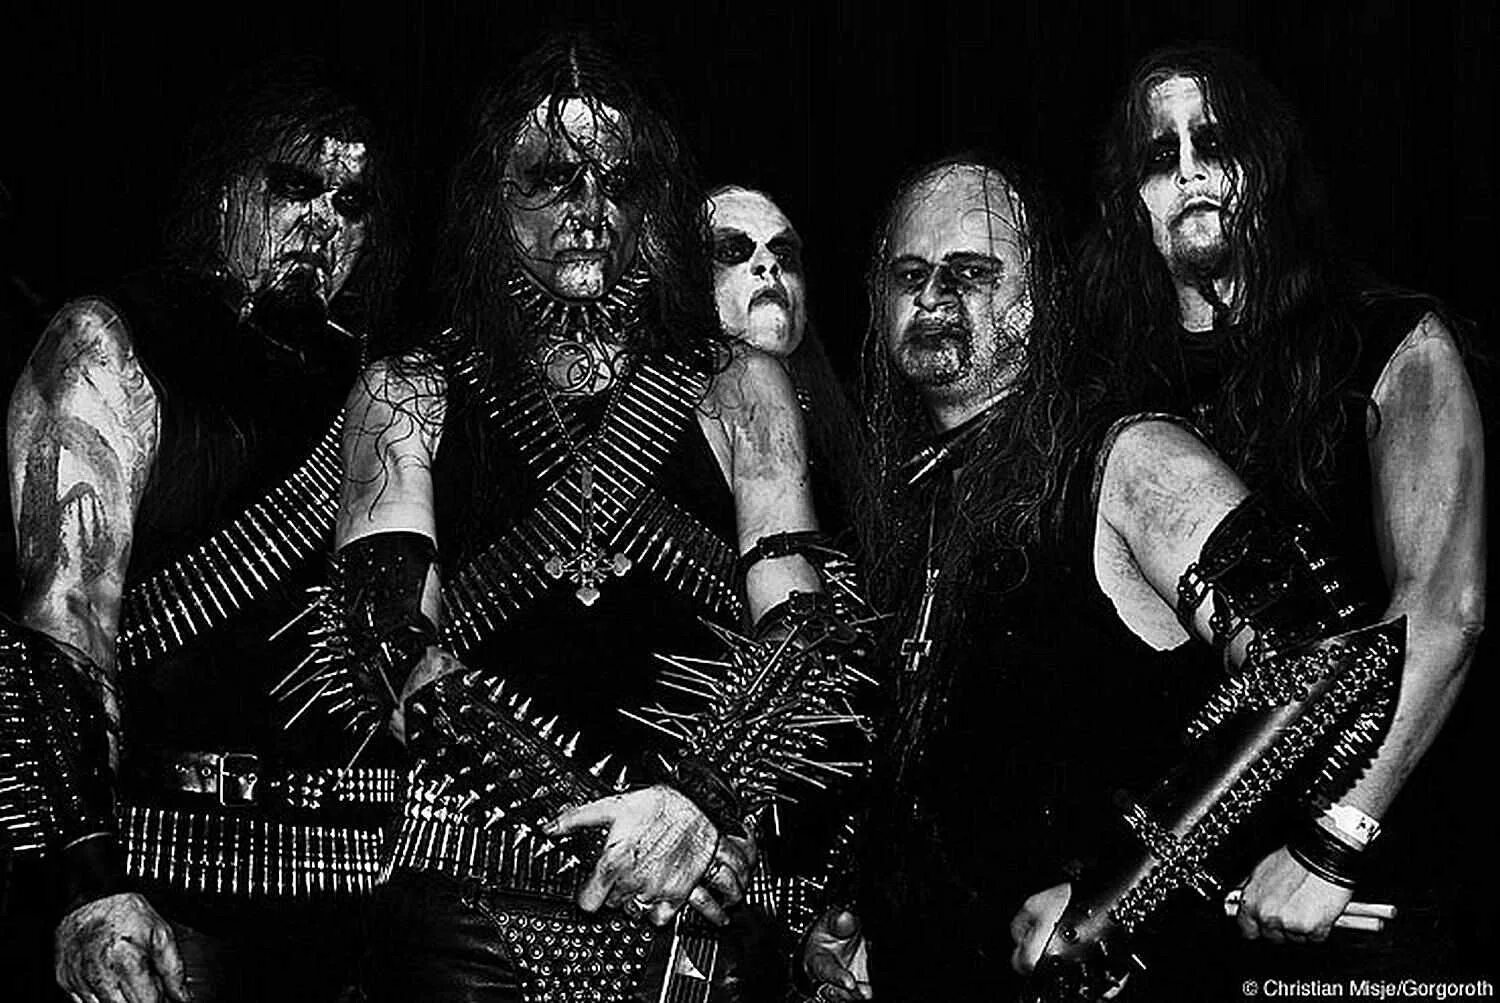 Найти металл группы. Gorgoroth норвежский Блэк метал. Black Metal группа xwmcndjsjjdjdjrjd.